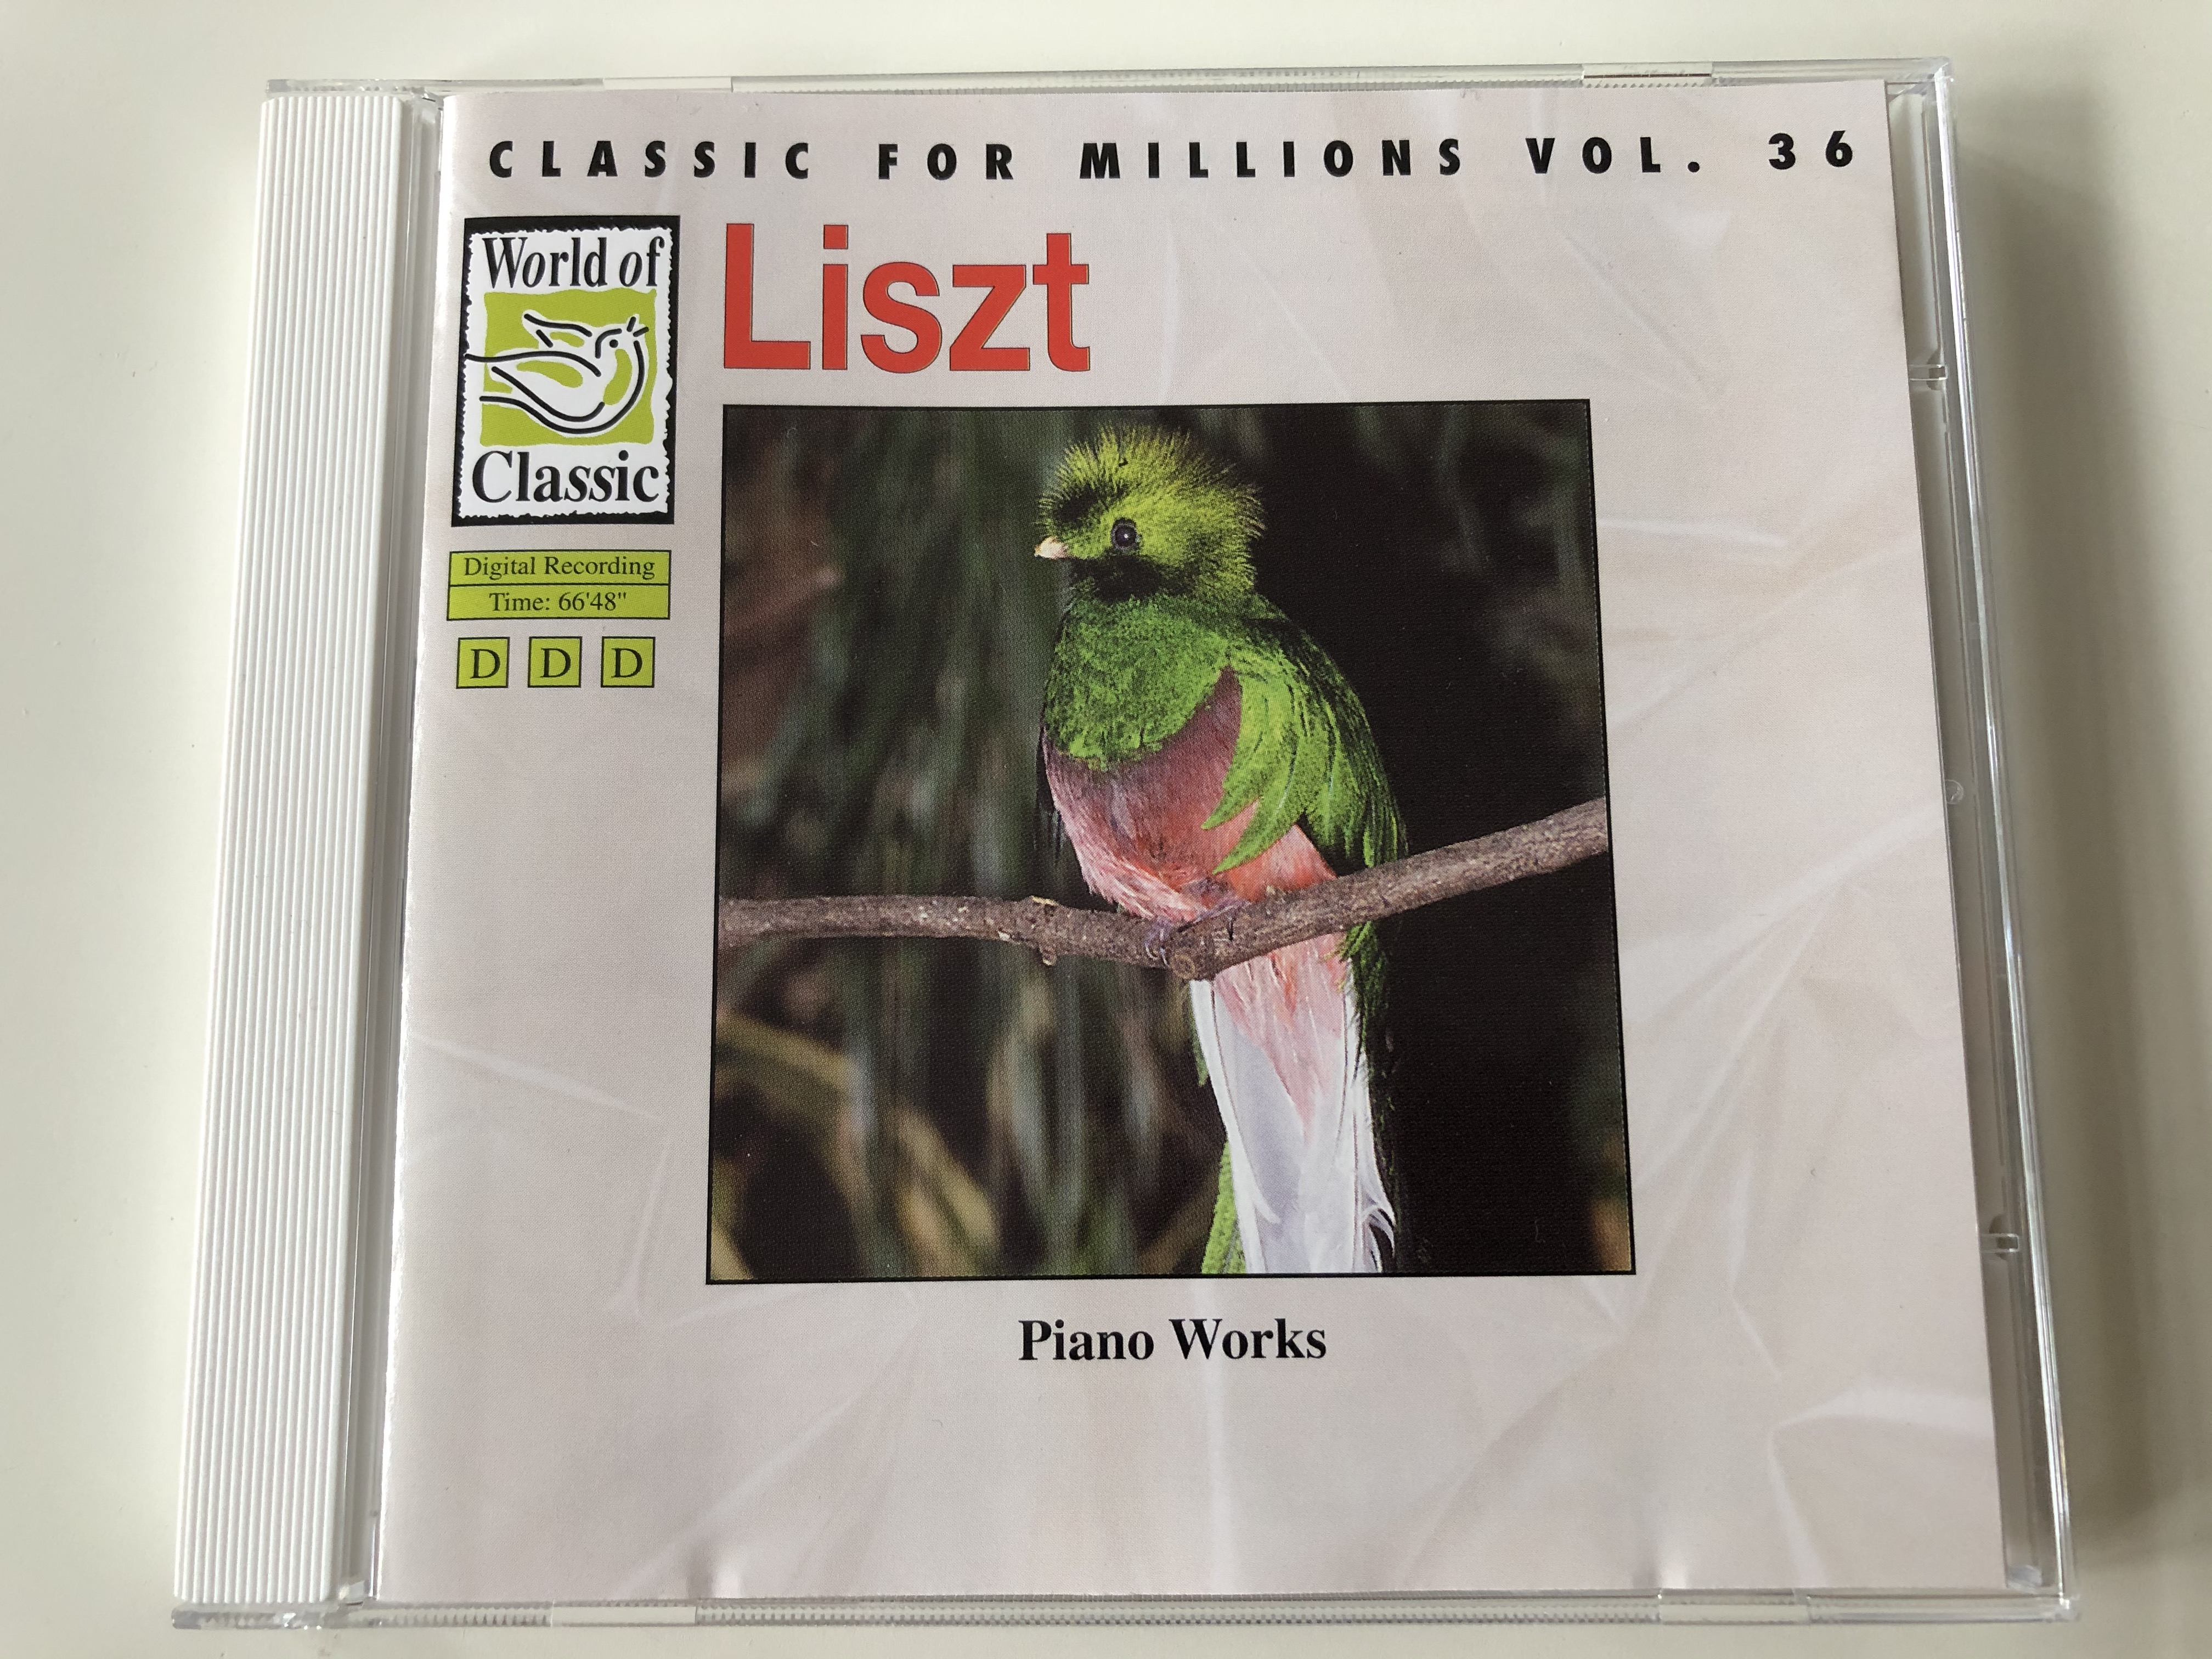 classic-for-millions-vol.-36-liszt-piano-works-world-of-classic-audio-cd-1993-870-1036-1-.jpg